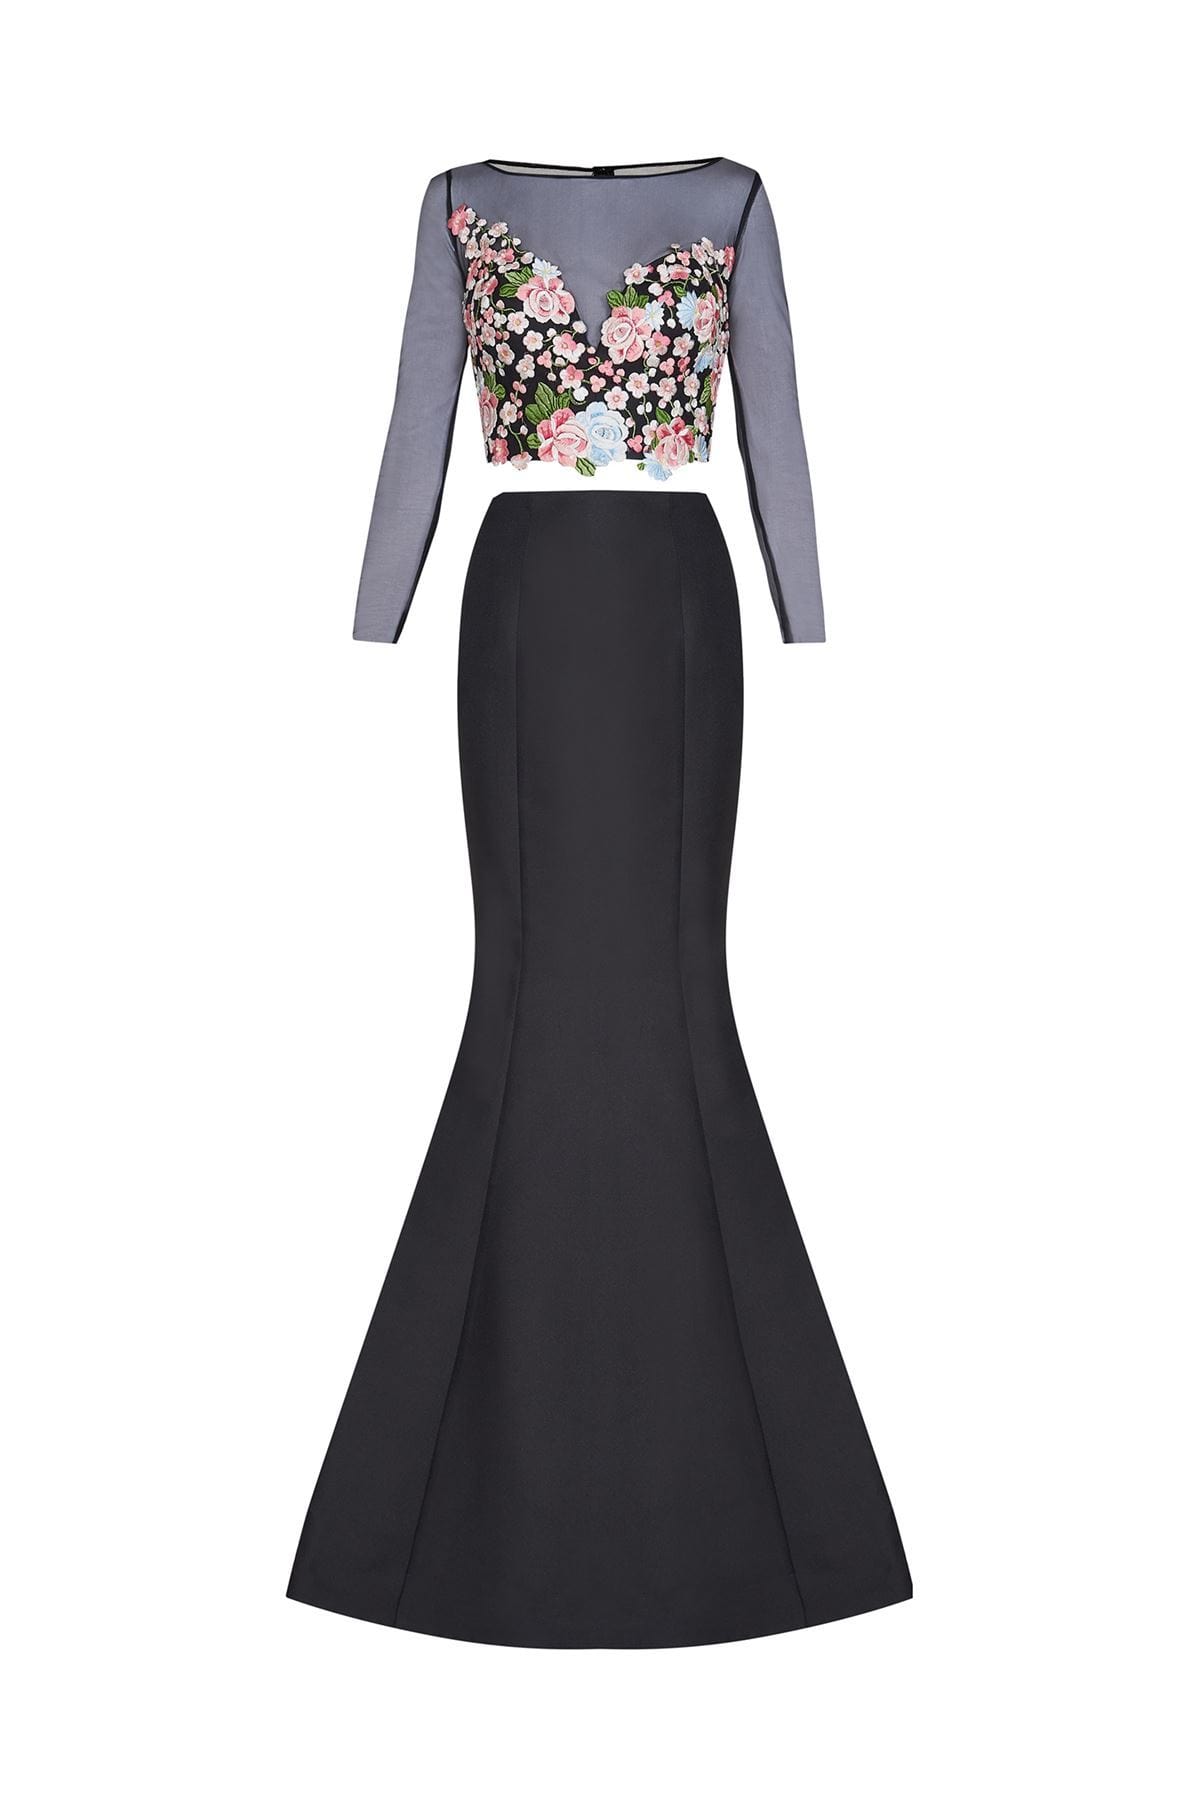 Tarik Ediz - Floral Accented Mermaid Dress 50004 Special Occasion Dress 0 / Black